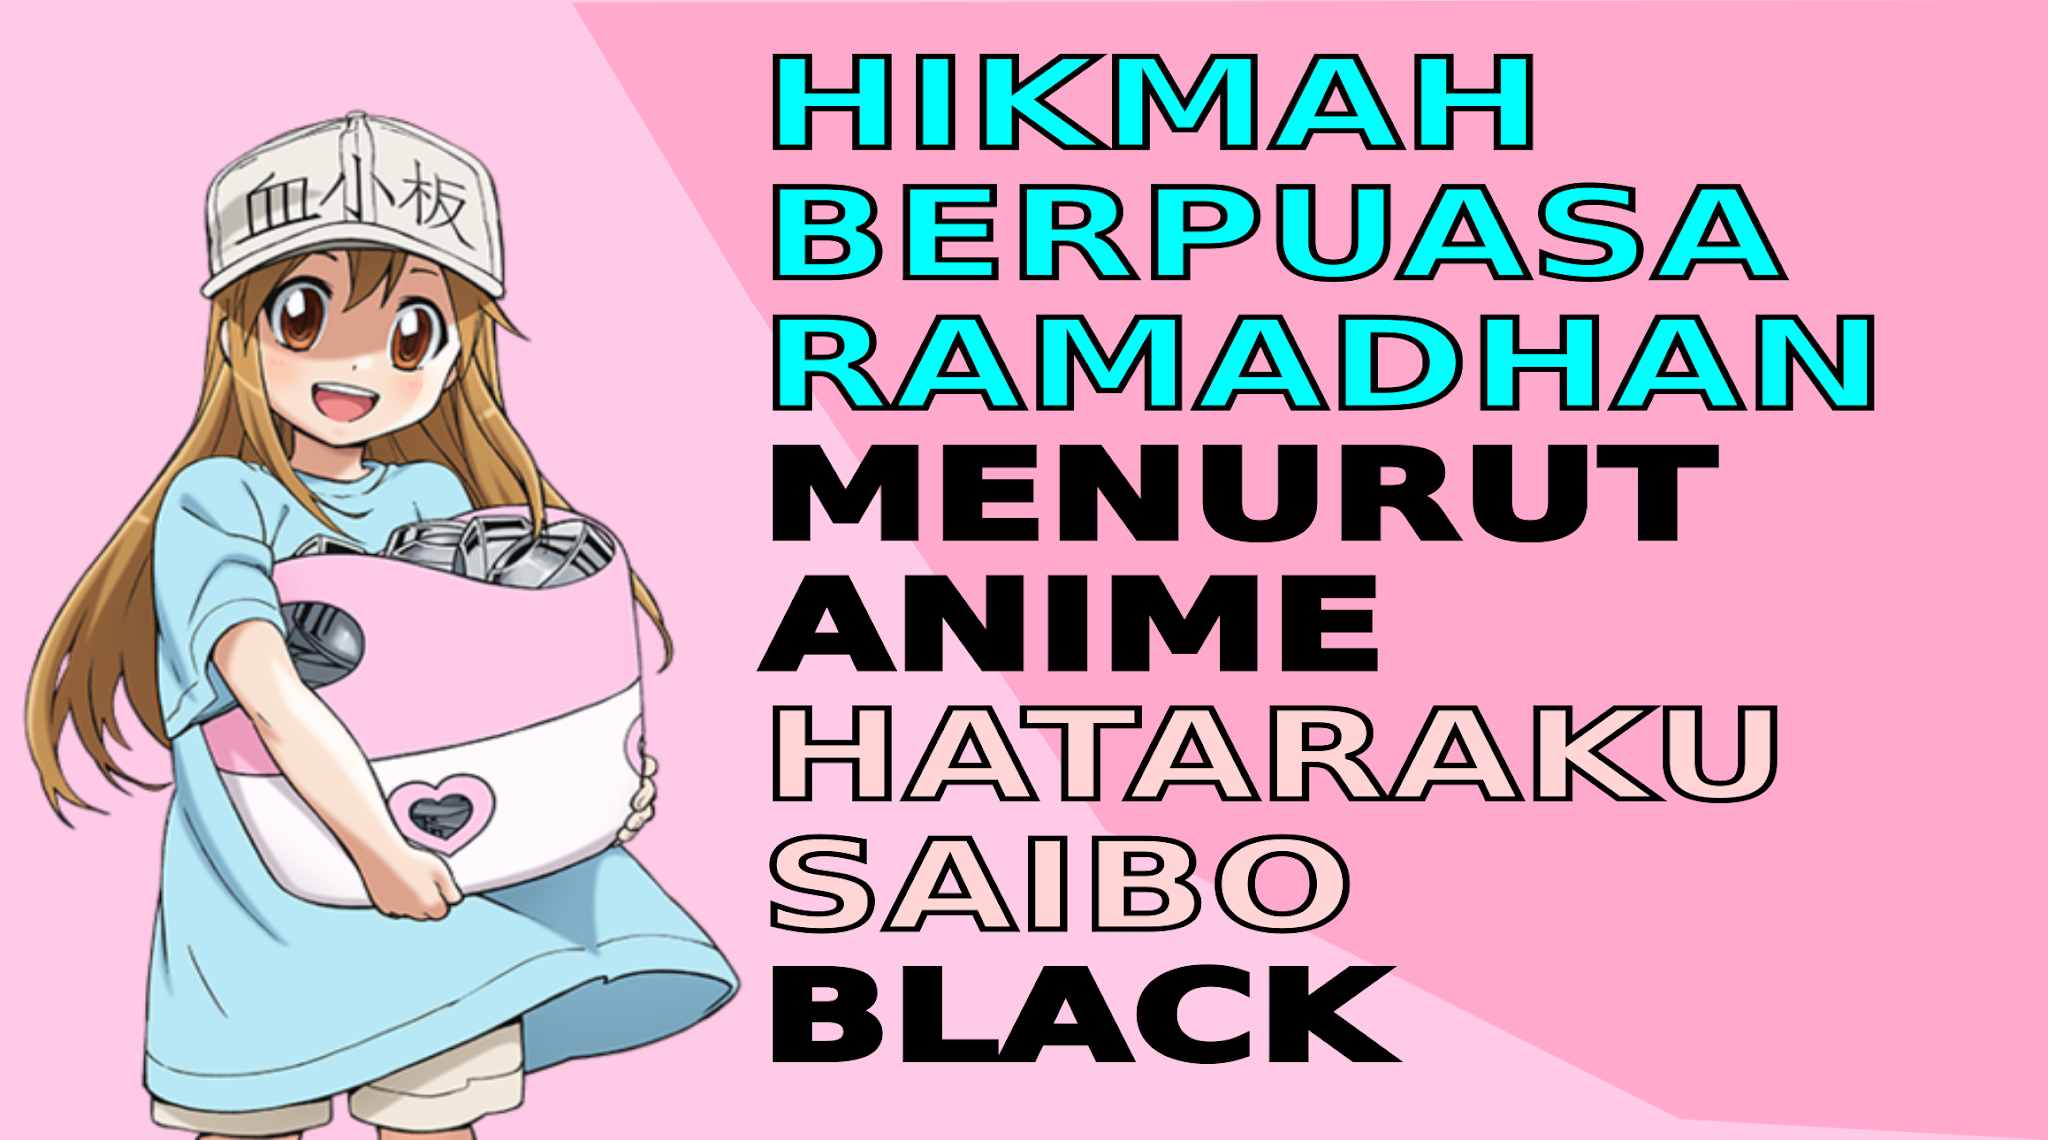 Kenapa Puasa Ramadhan Wajib Menurut Anime Hataraku Saibou Black?